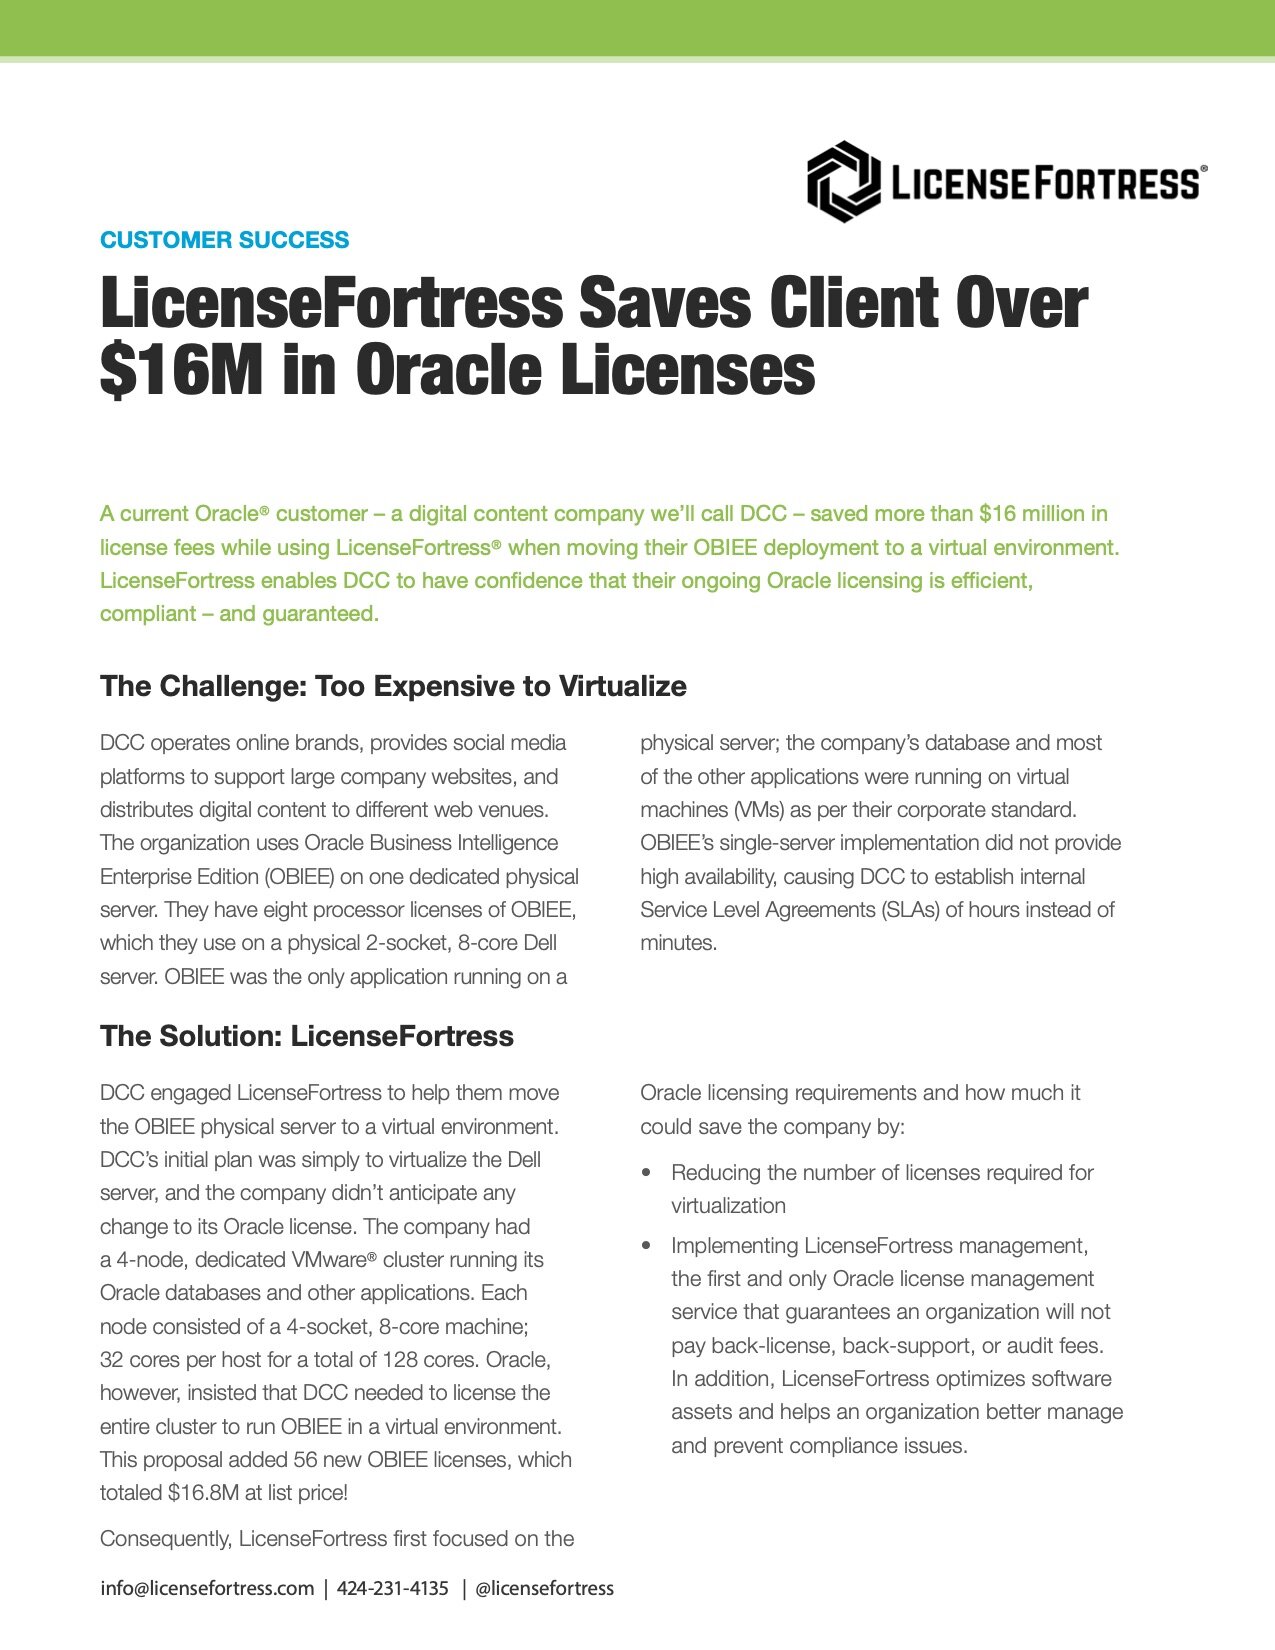 LicenseFortress Saves Digital Media Over $16M in Oracle Licenses